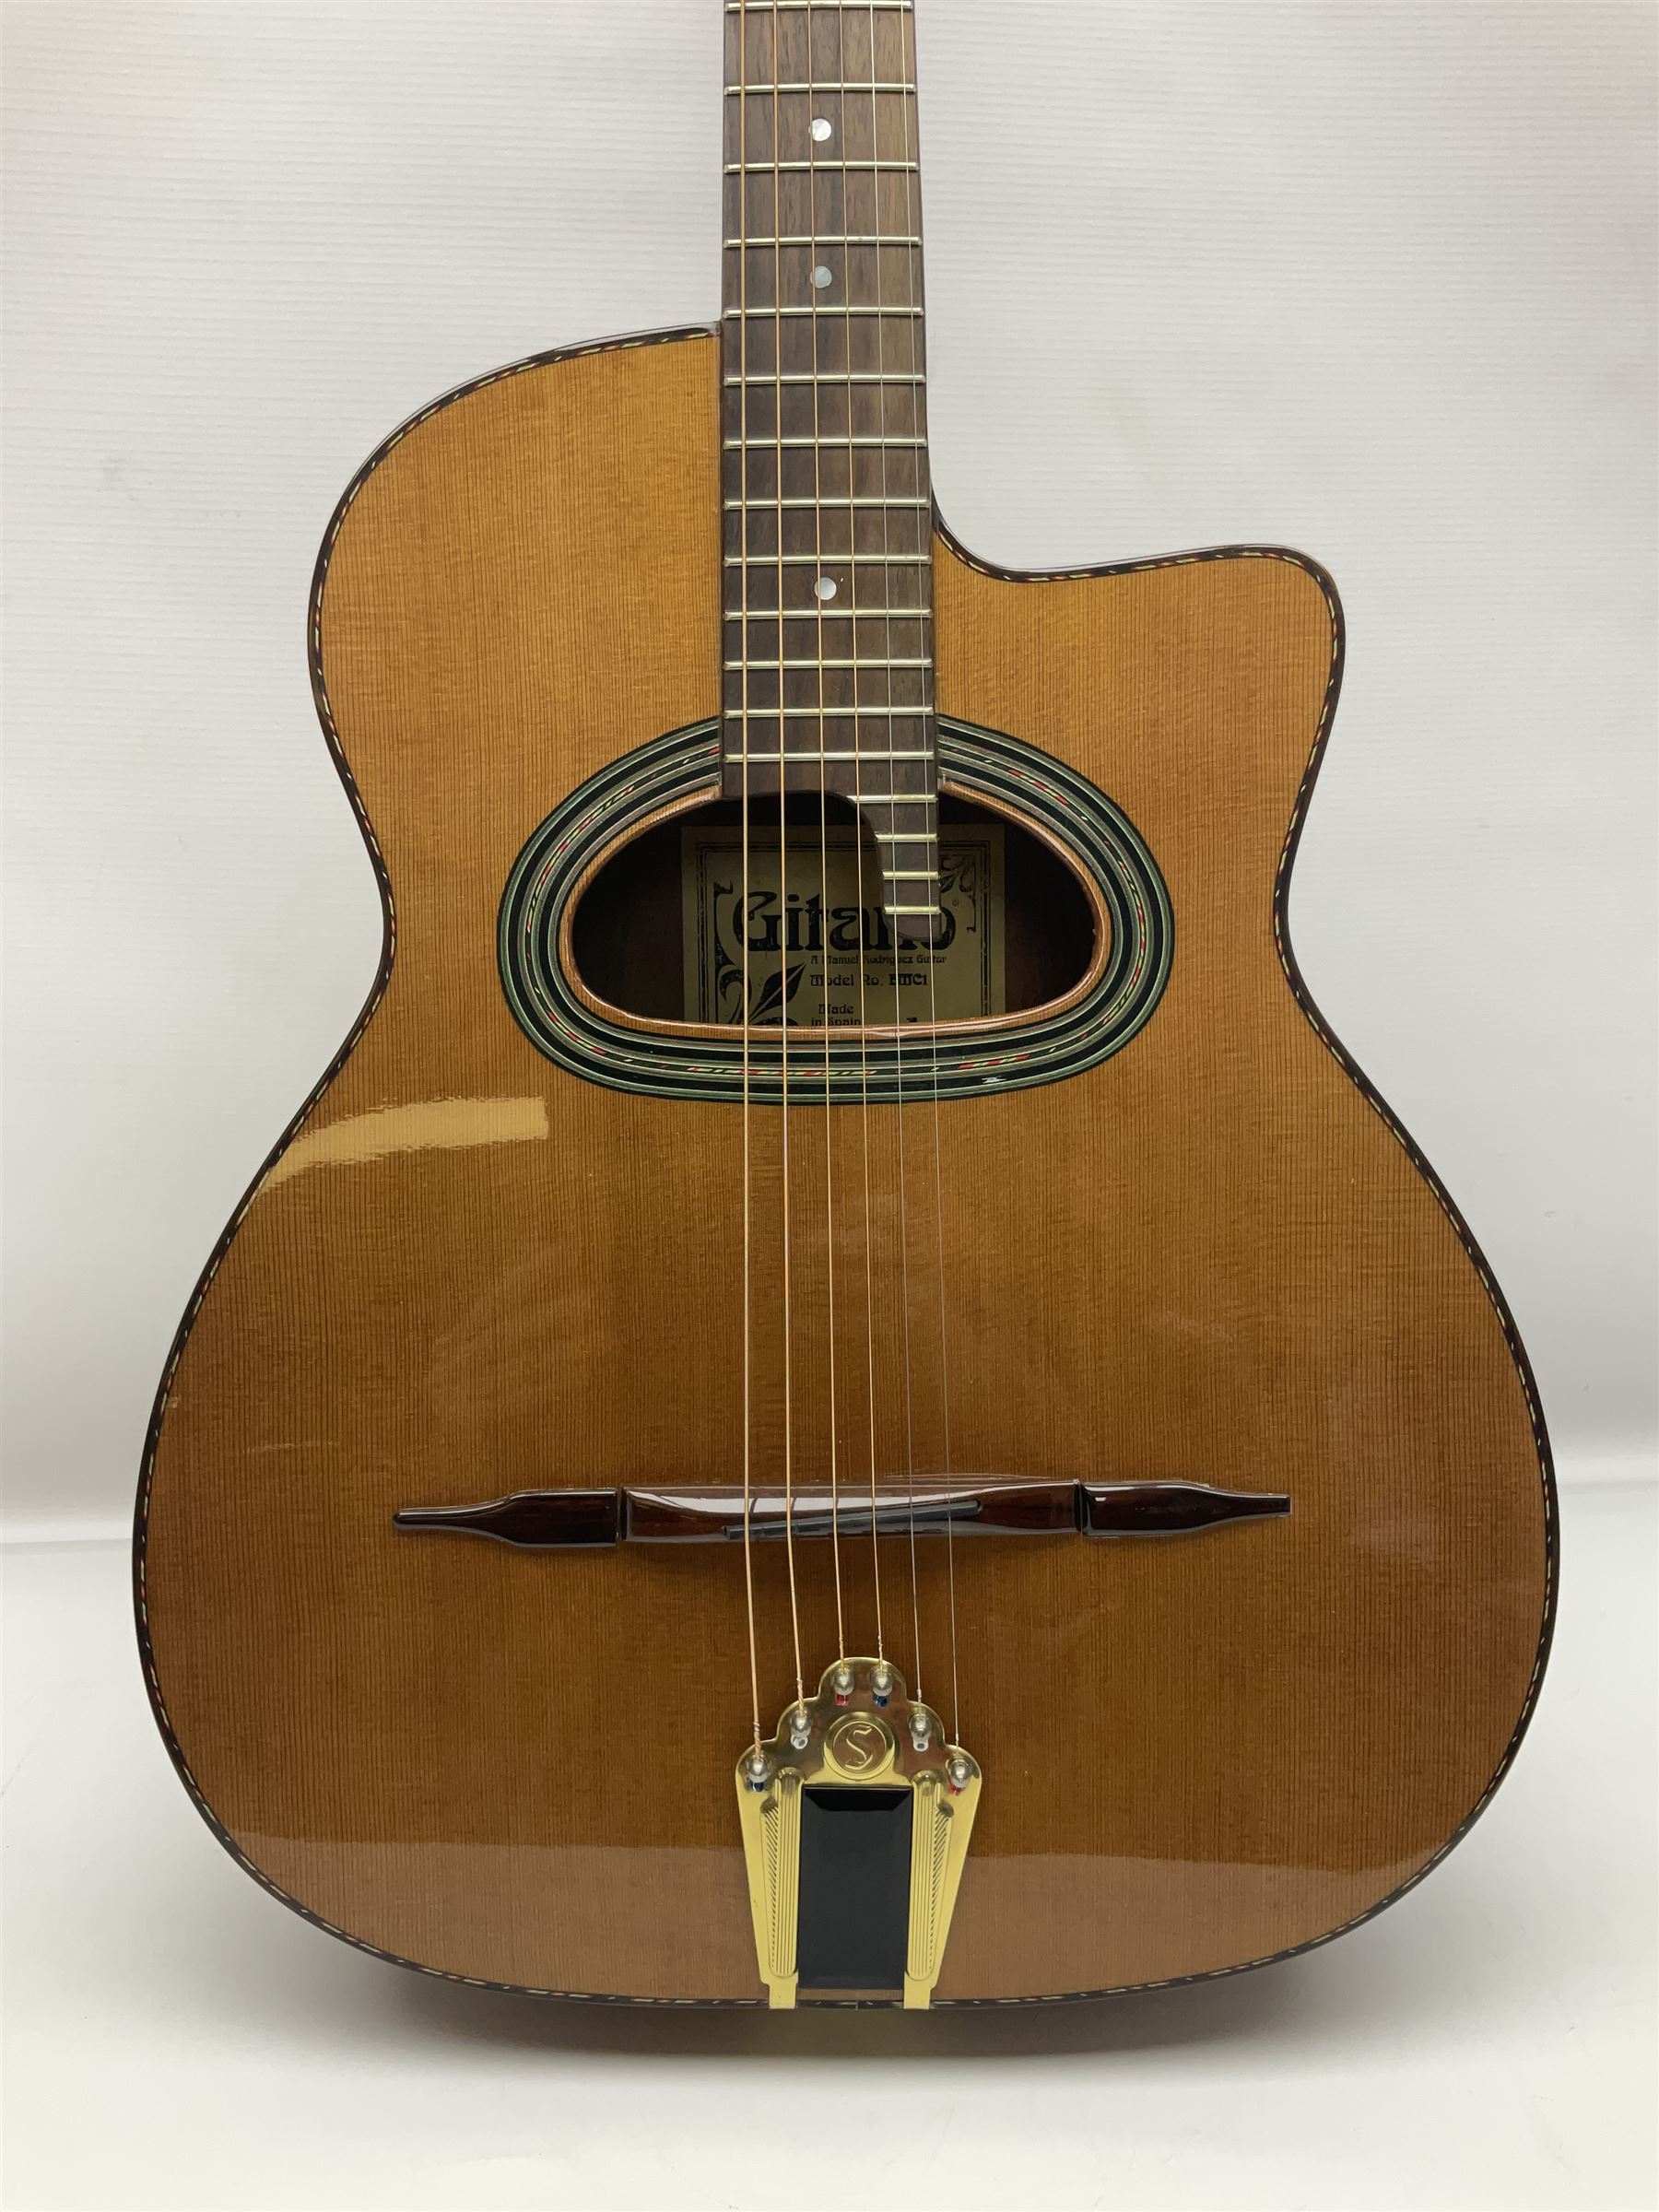 Spanish Gitano Manuel Rodriguez EMC1 Maccaferri acoustic guitar - Image 5 of 20